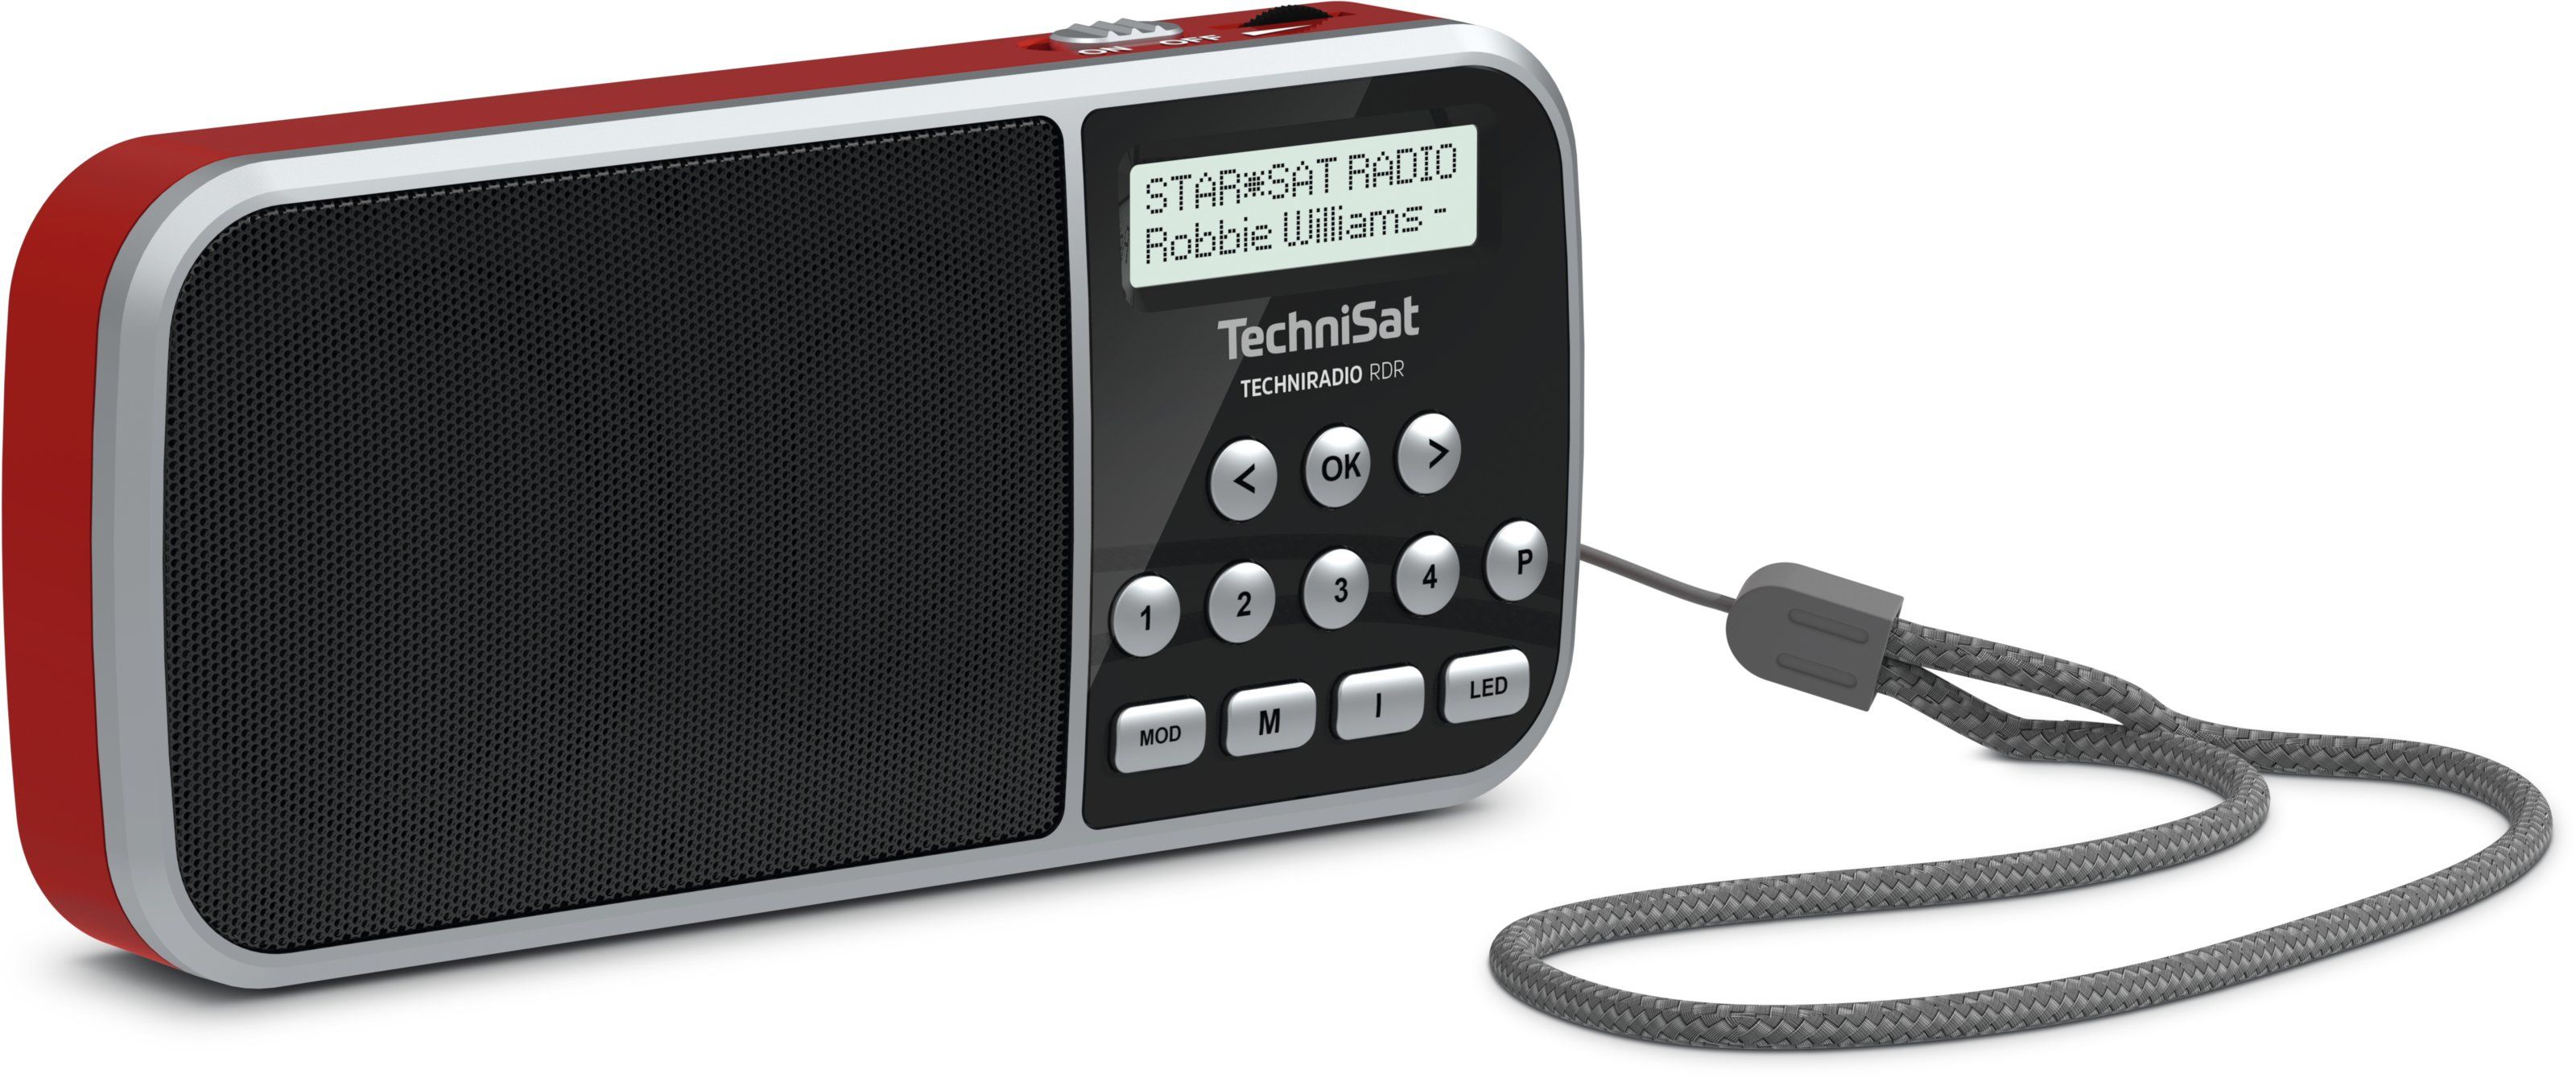 FM TechniRadio DAB+, Radio expert (Rot) TechniSat RDR von Technomarkt Tragbar